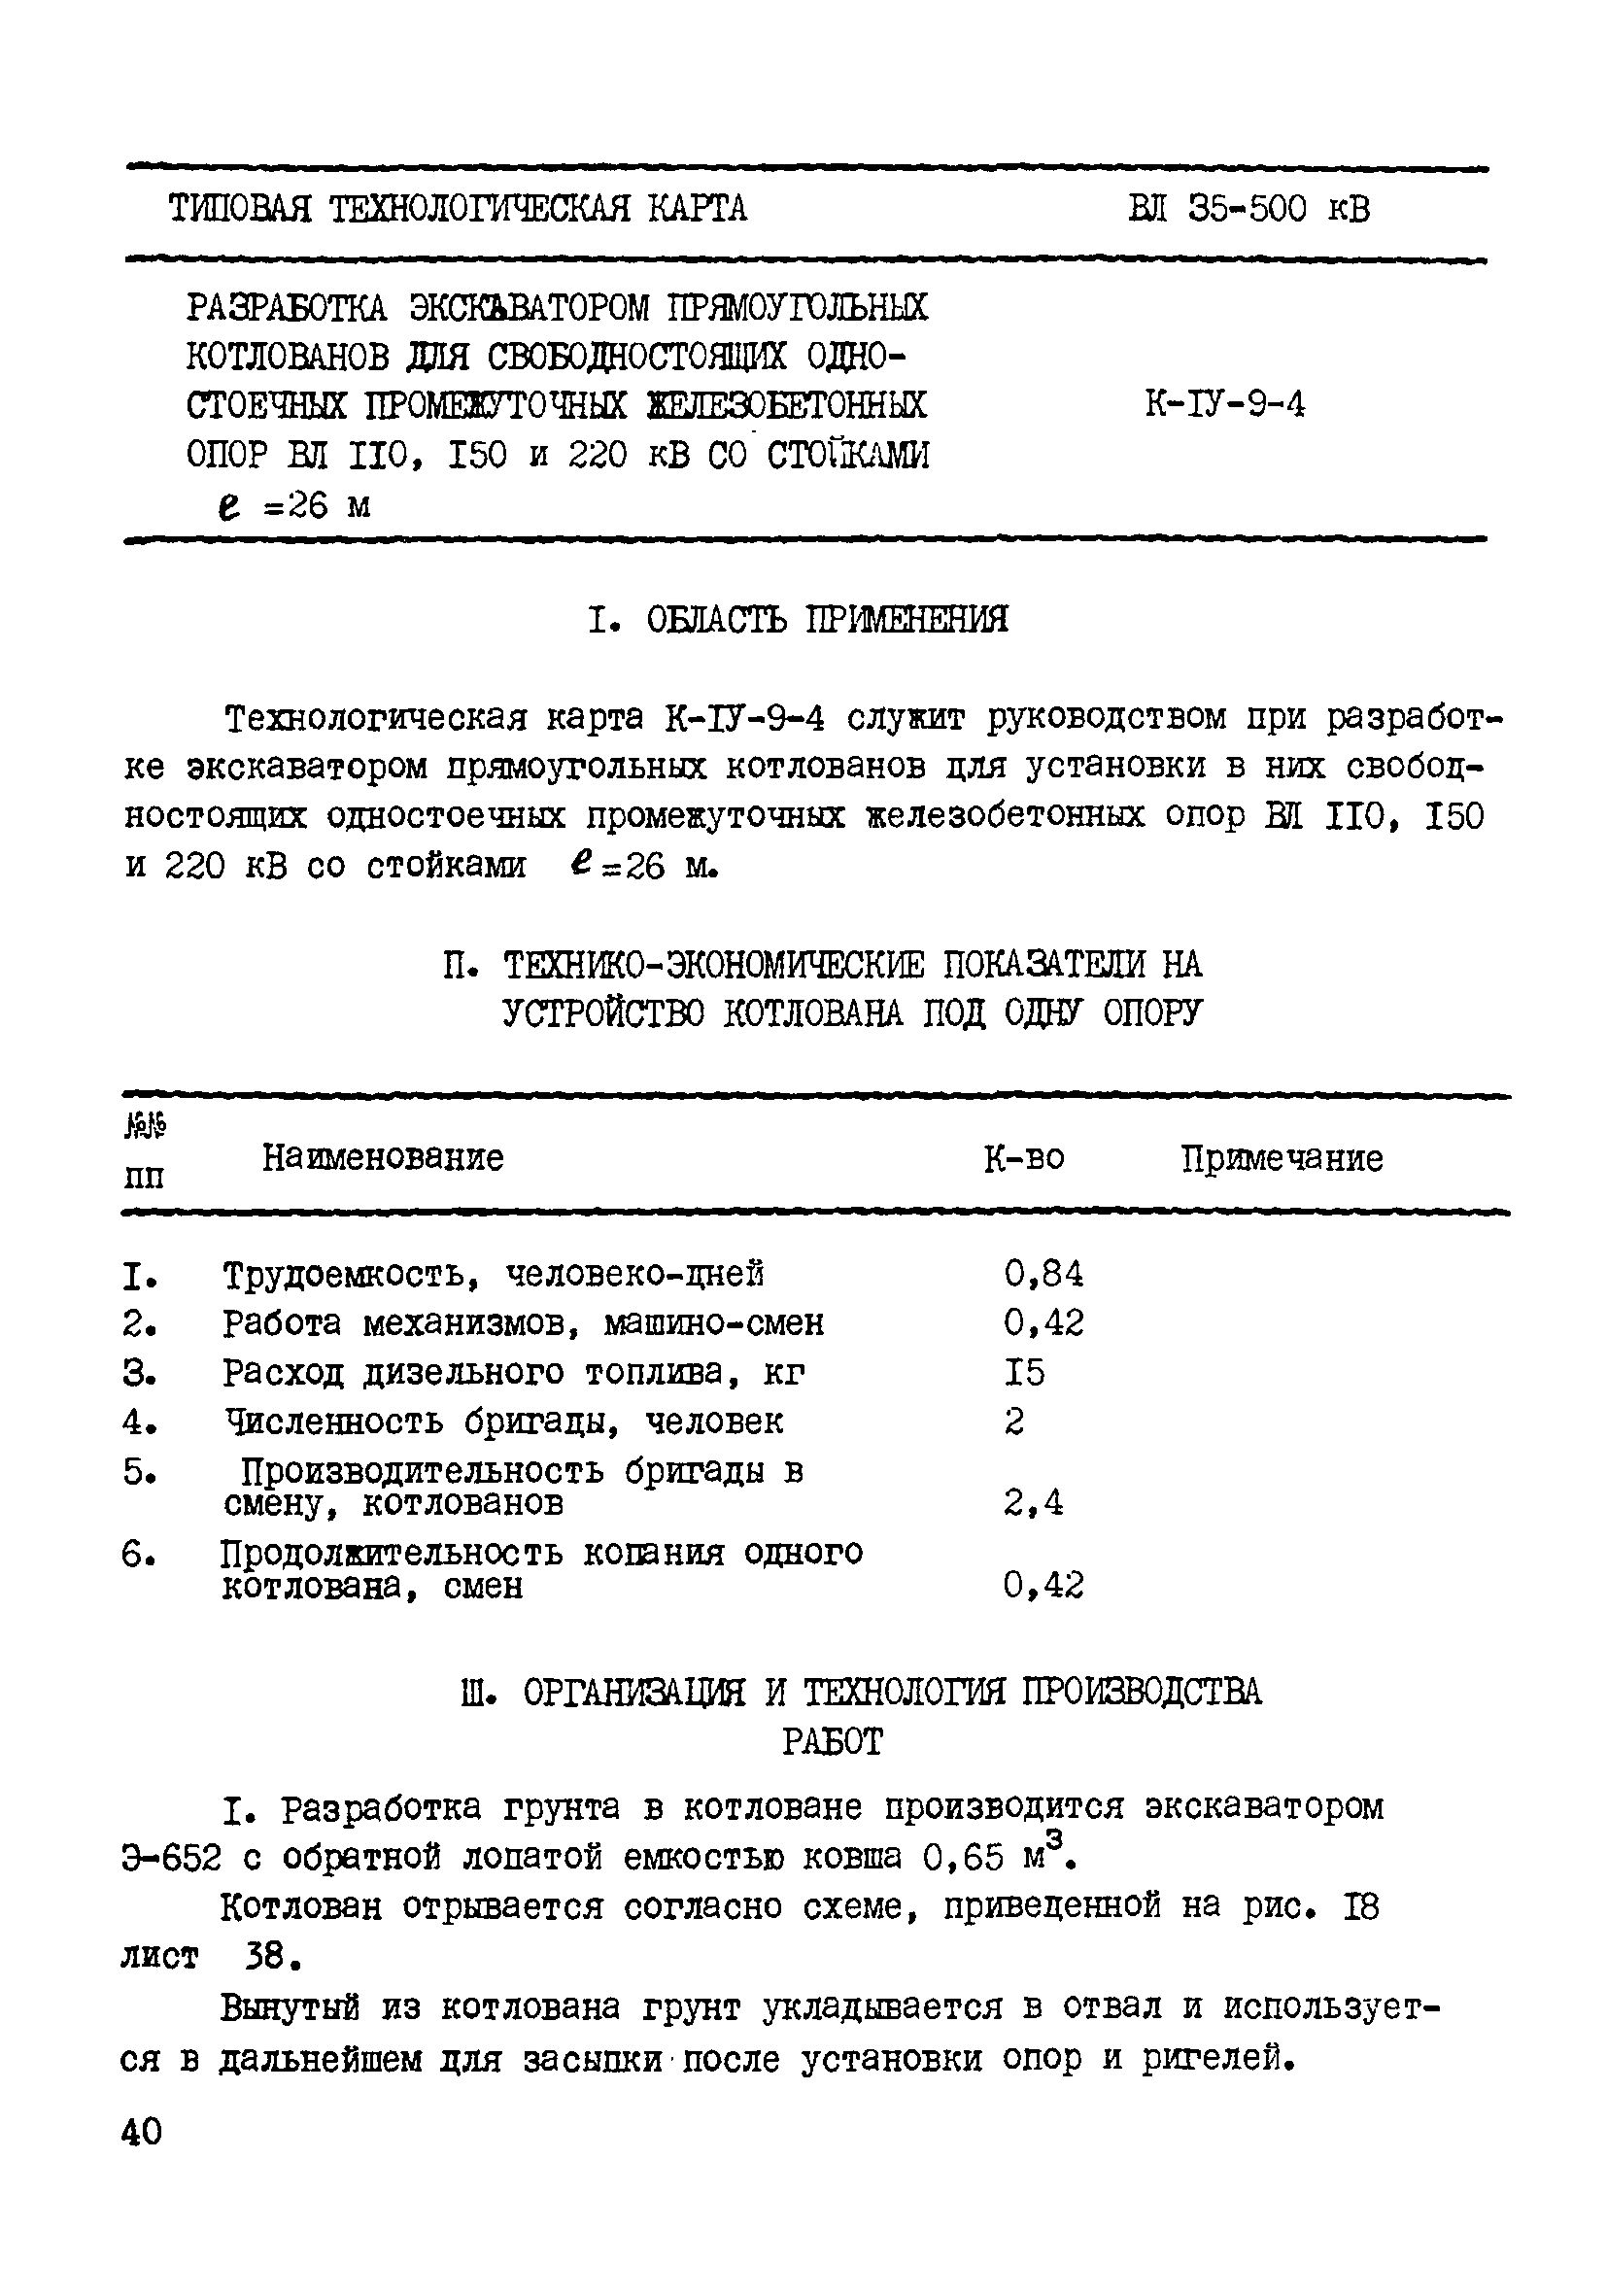 ТТК К-IV-9-4